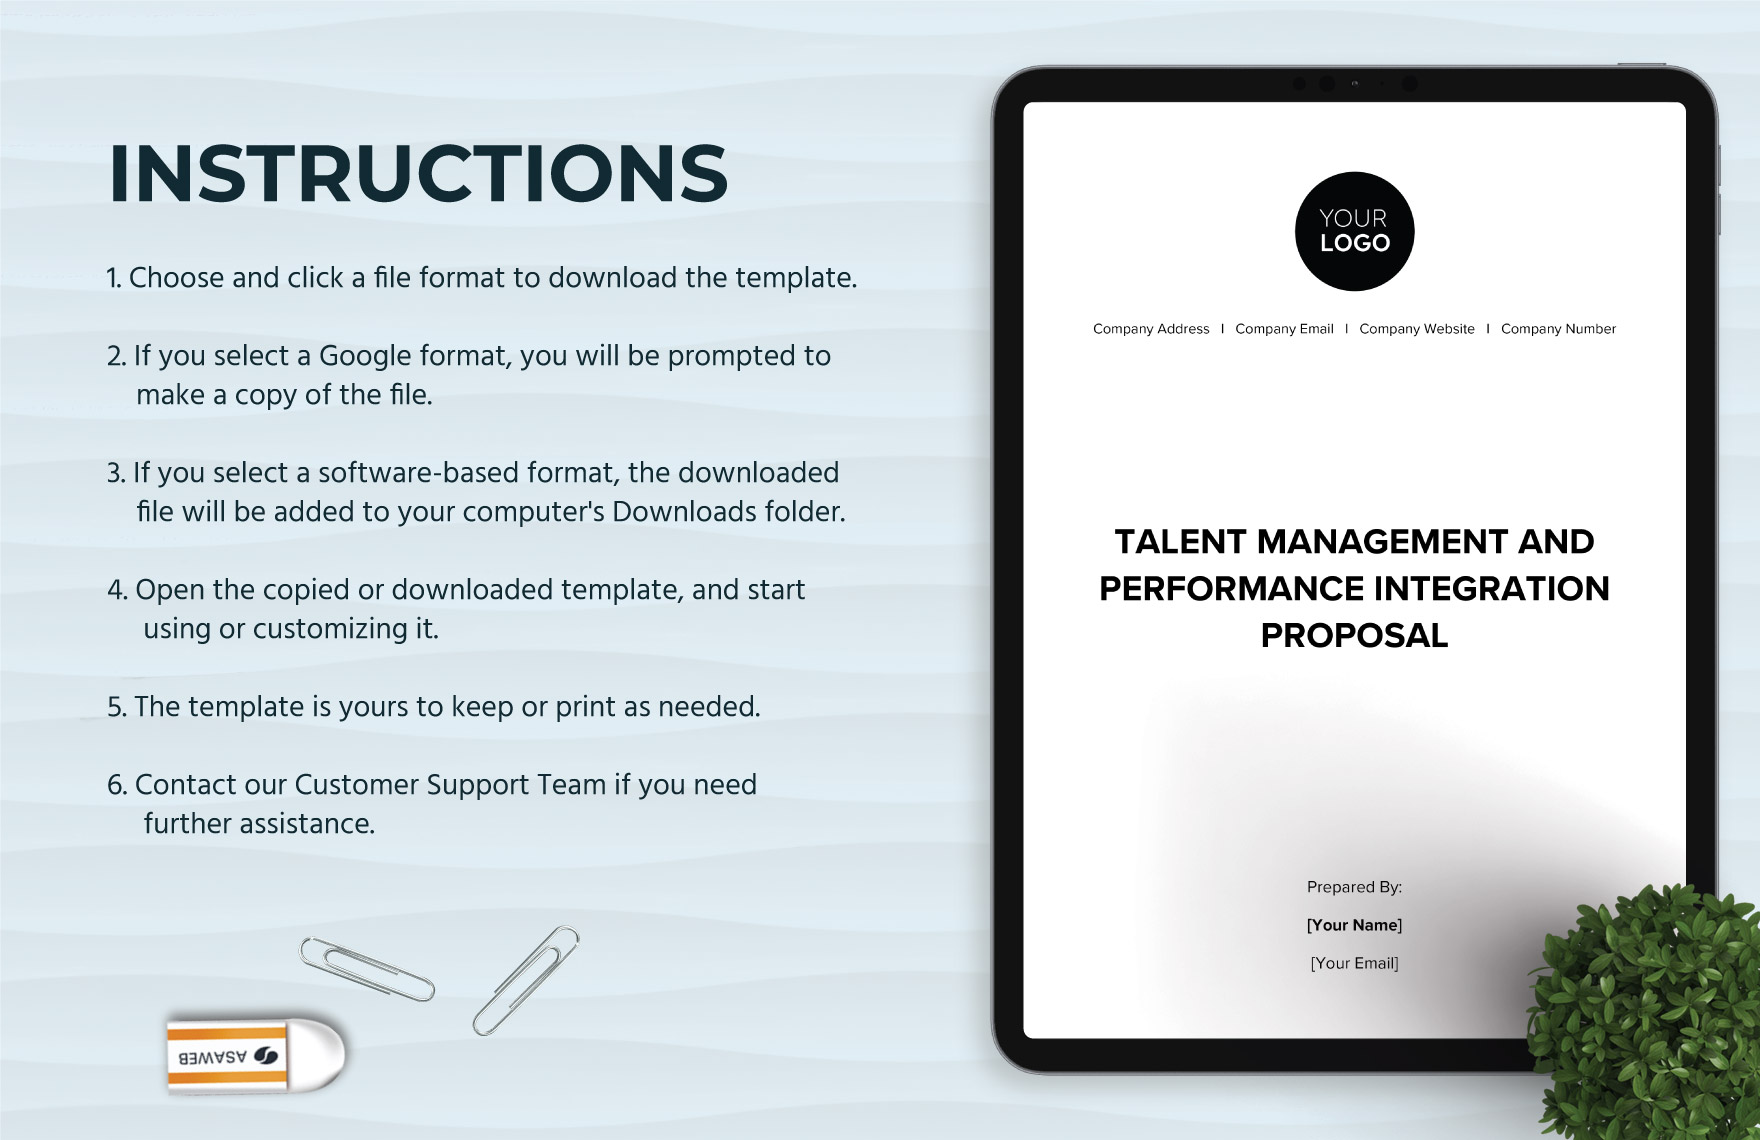 Talent Management & Performance Integration Proposal HR Template